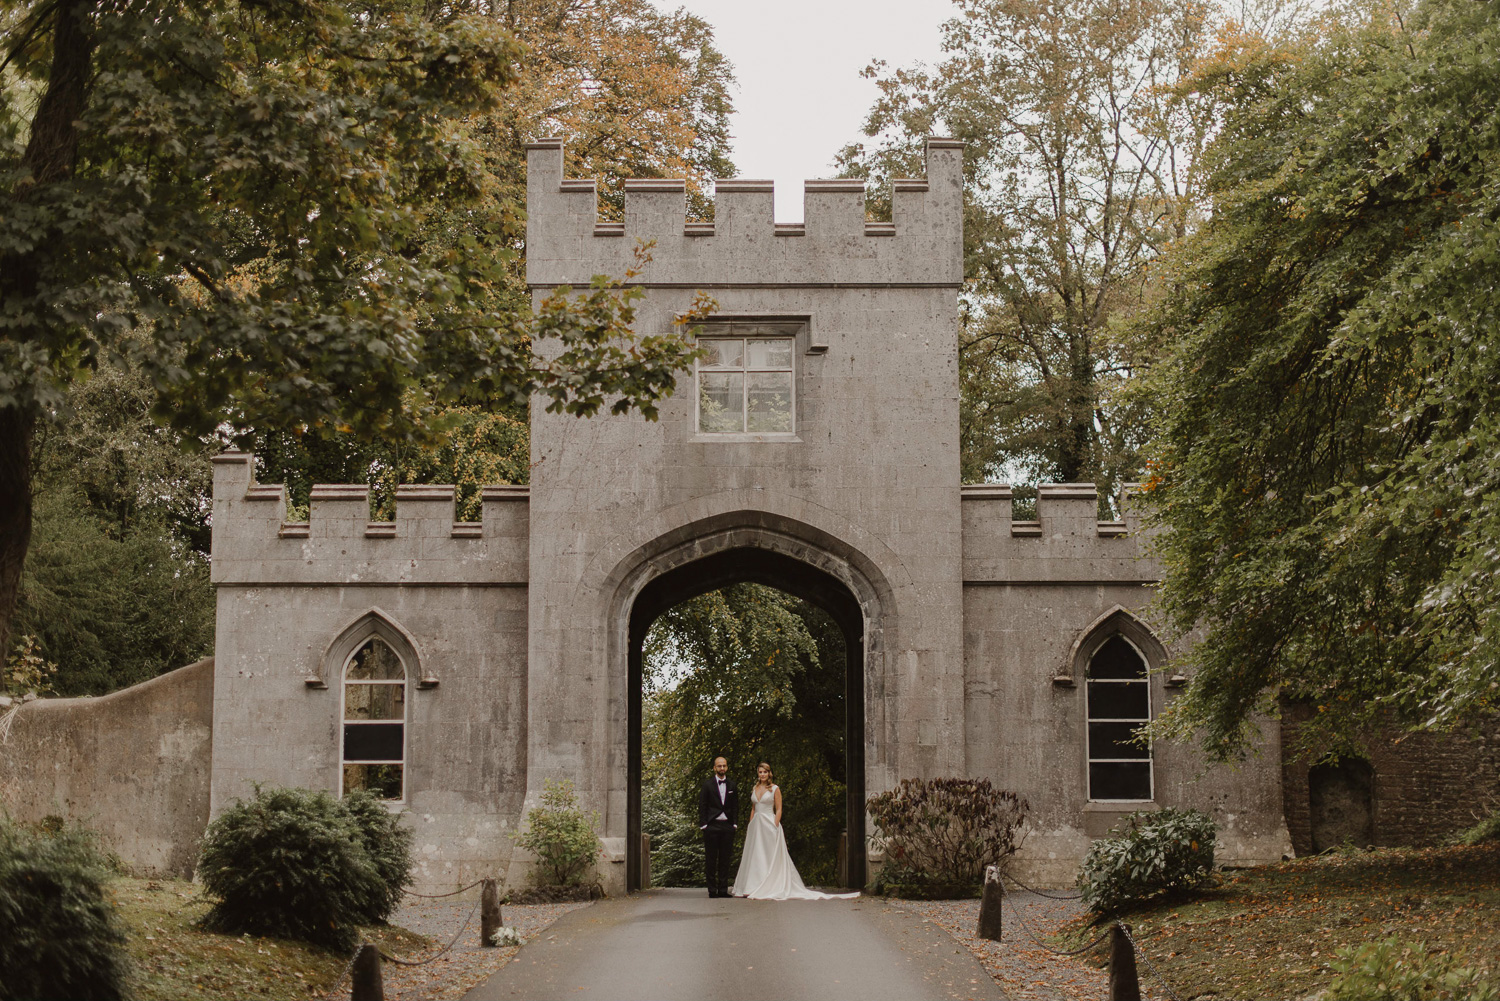 Markree castle wedding photographs -43.jpg